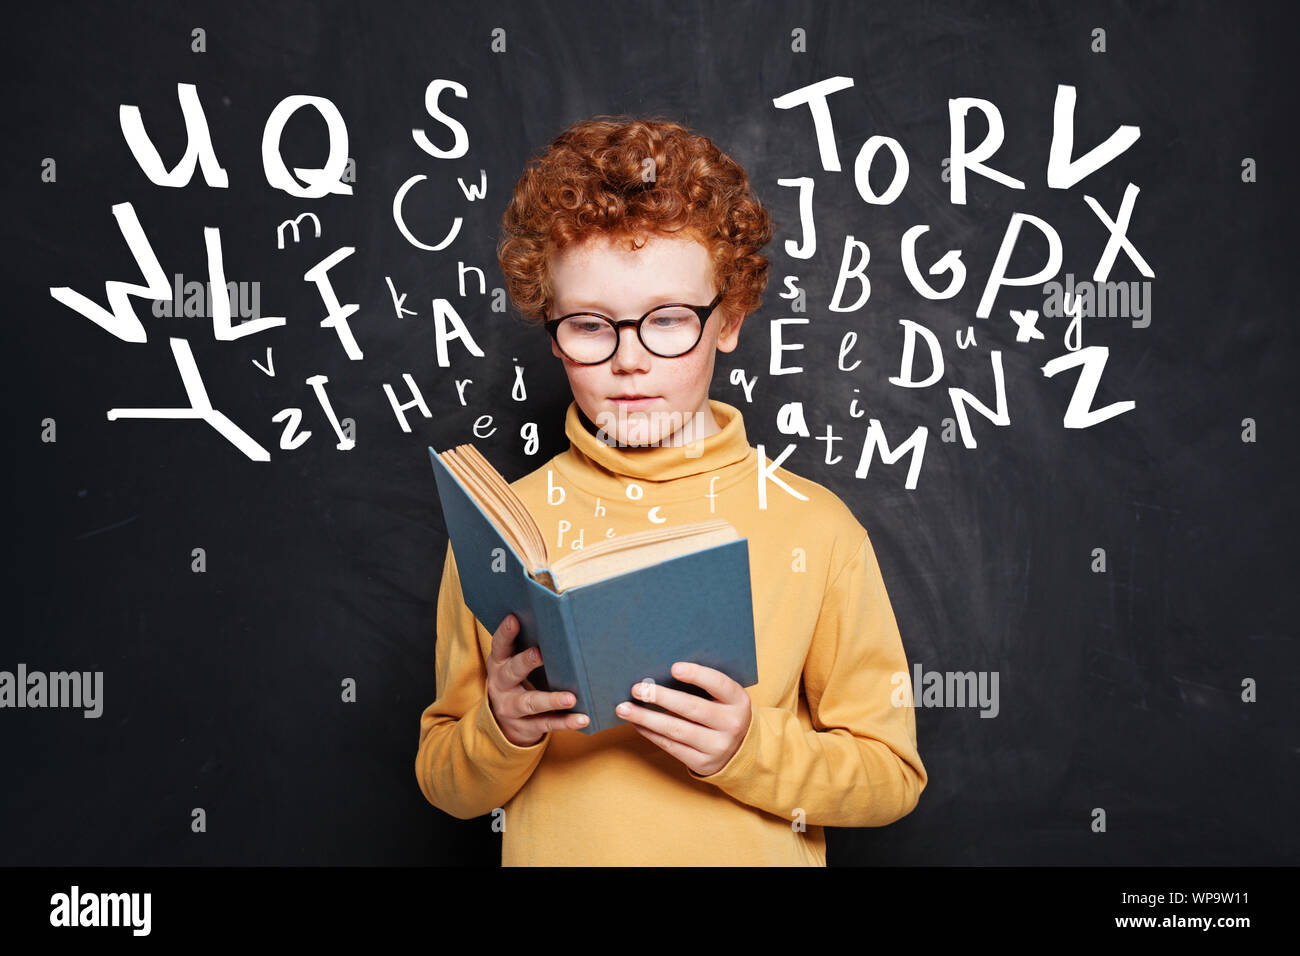 Child reading. Kid school boy holding book on black background Stock Photo